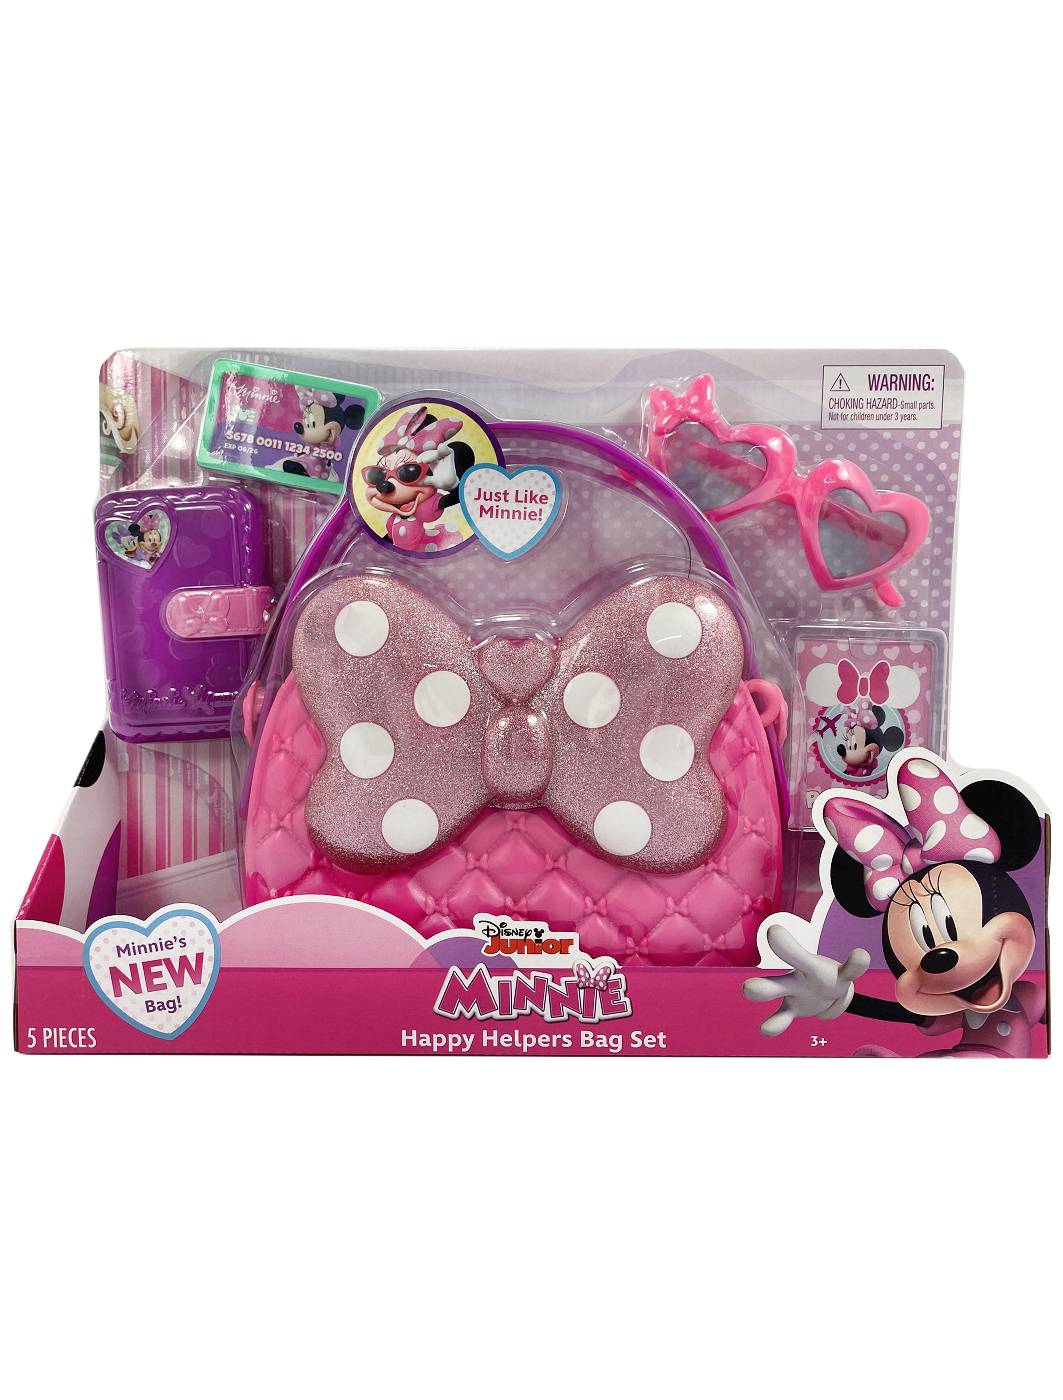 Disney Junior Minnie Mouse Happy Helpers Bag 9 Pieces Play Set.